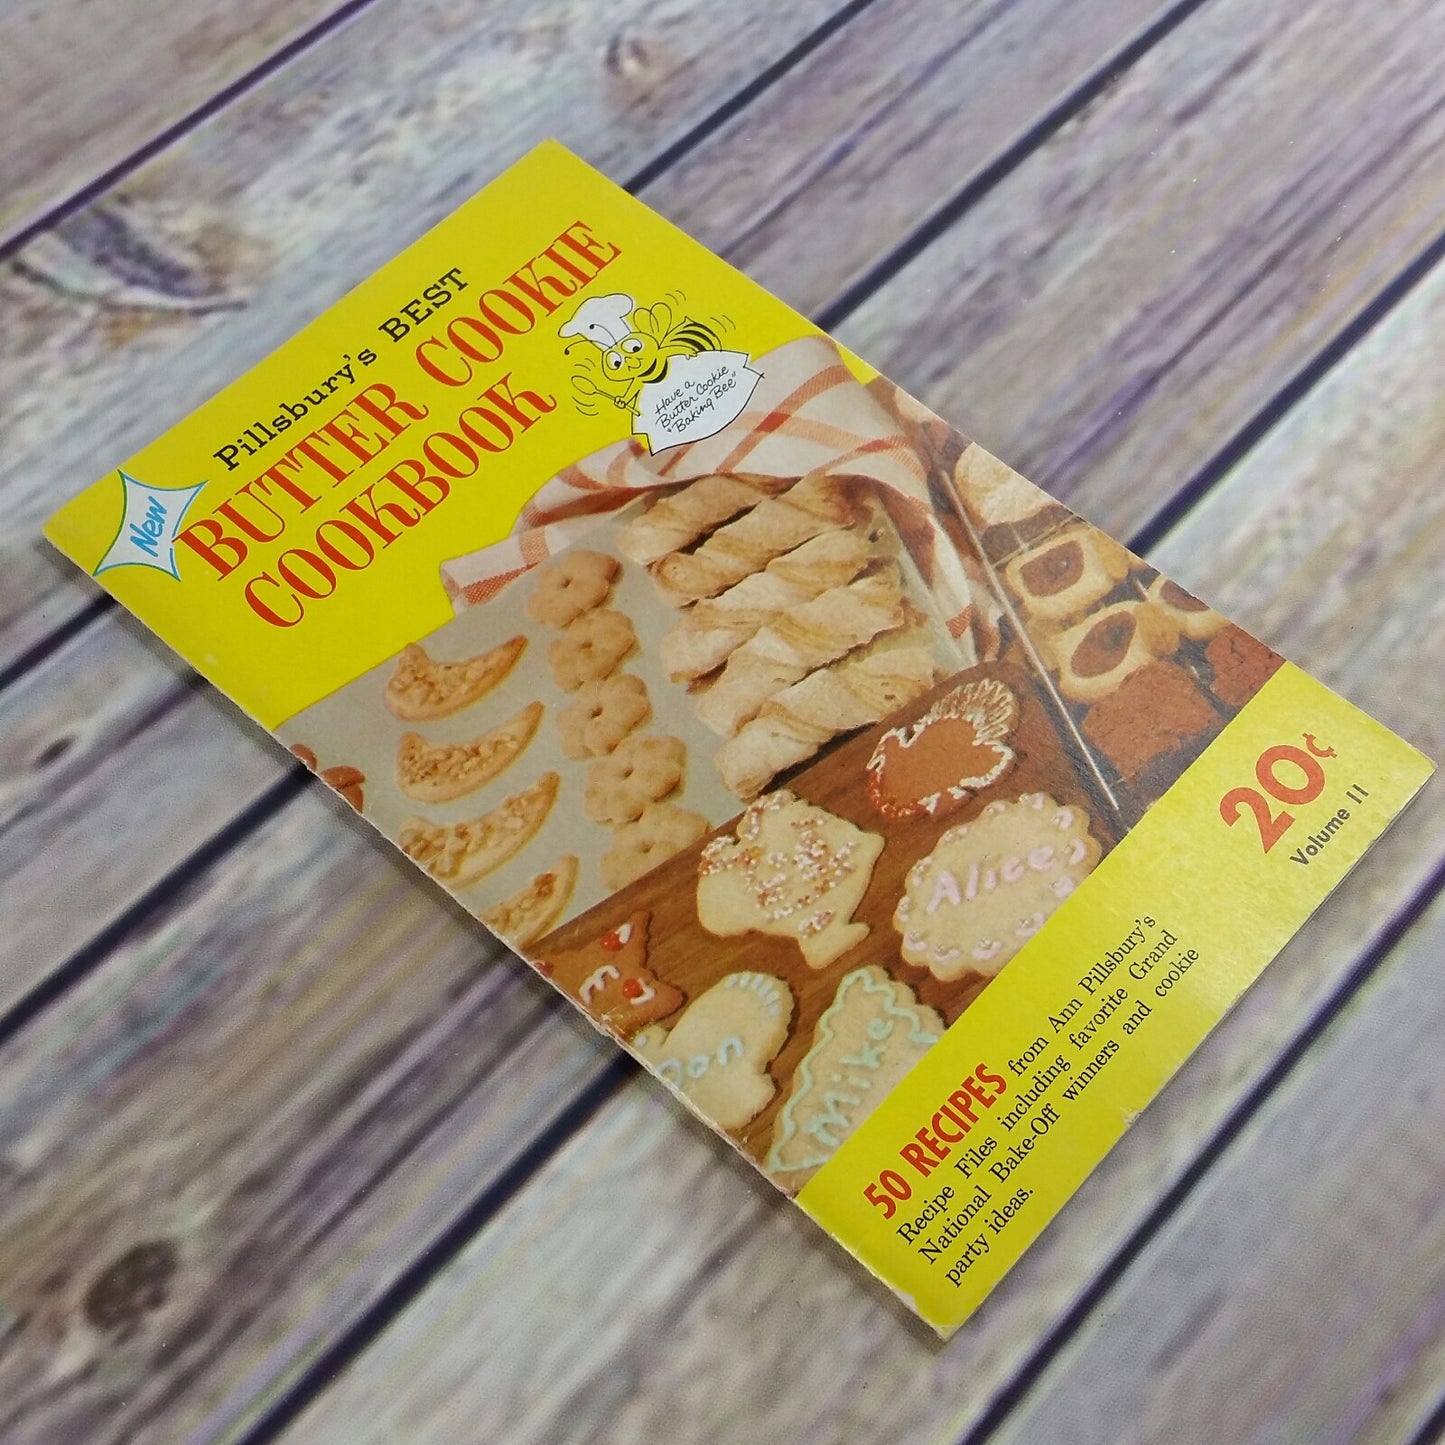 Vintage Cookbook Pillsburys Best Butter Cookie Bake Off Recipes Vol II Ann Pillsbury Recipe Files Paperback Booklet - At Grandma's Table